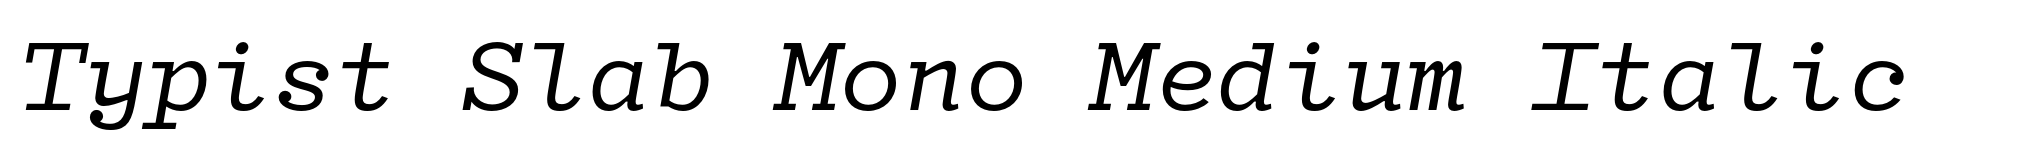 Typist Slab Mono Medium Italic image